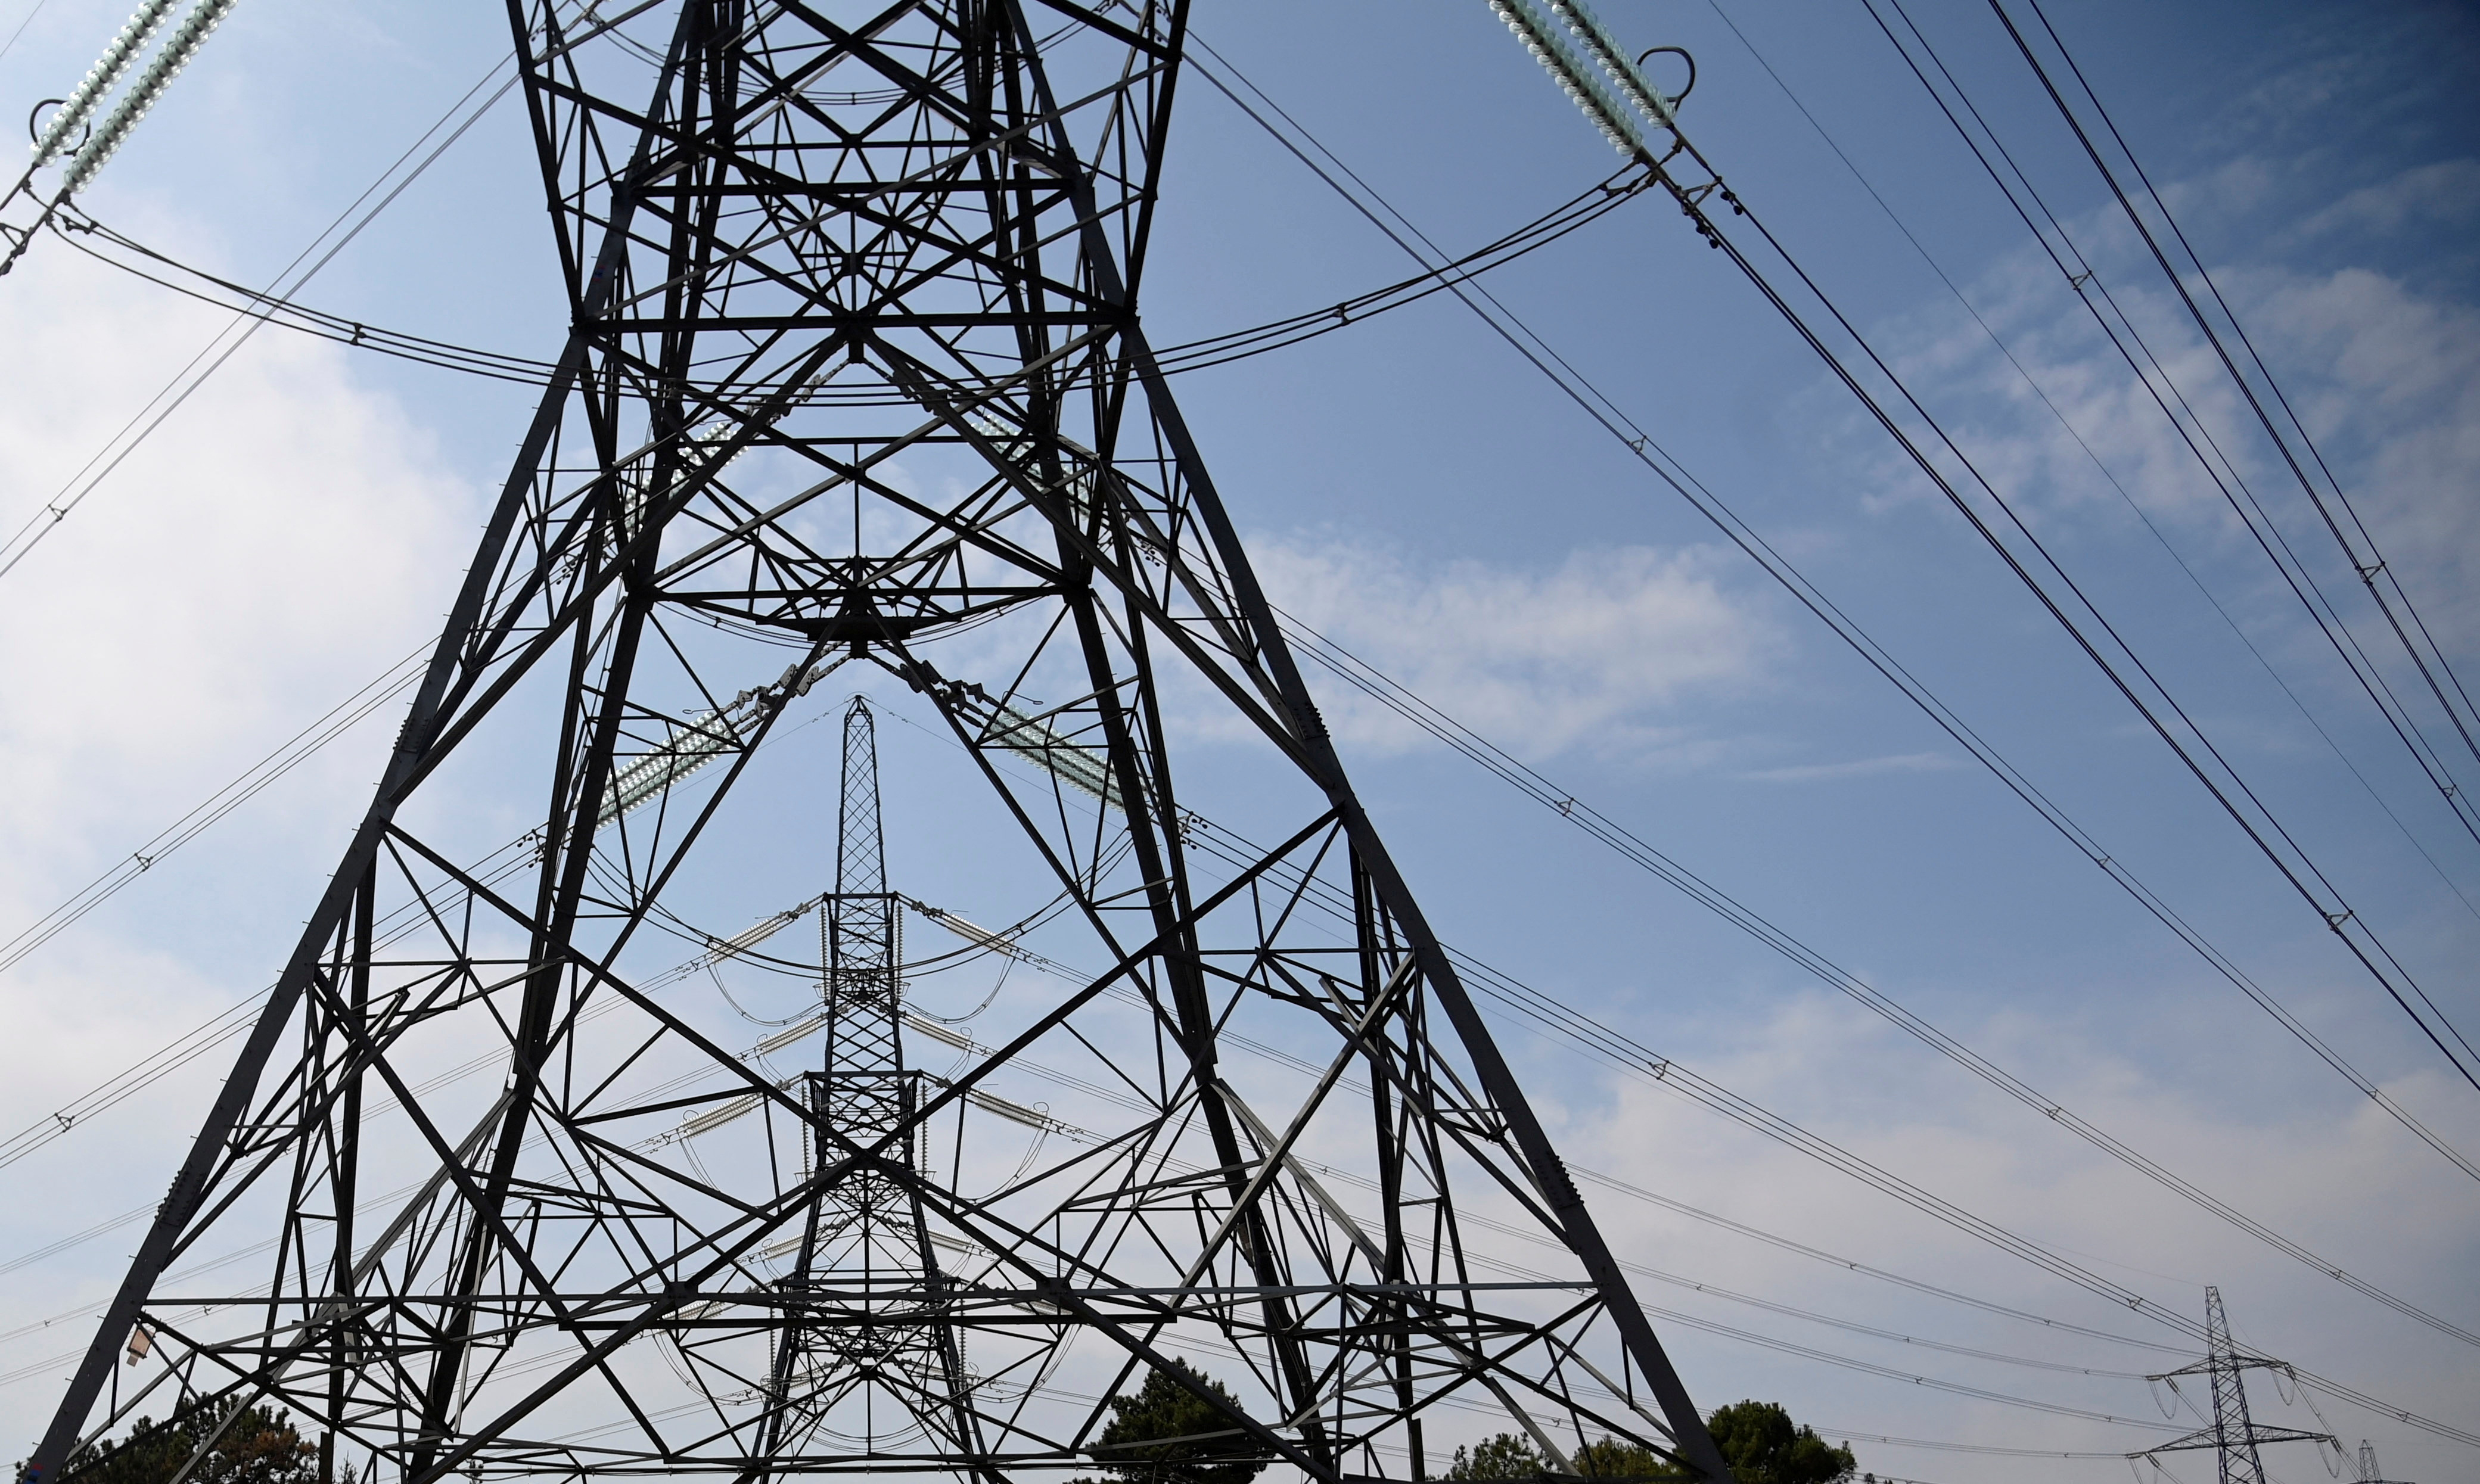 Electricity pylons are seen near Ashford